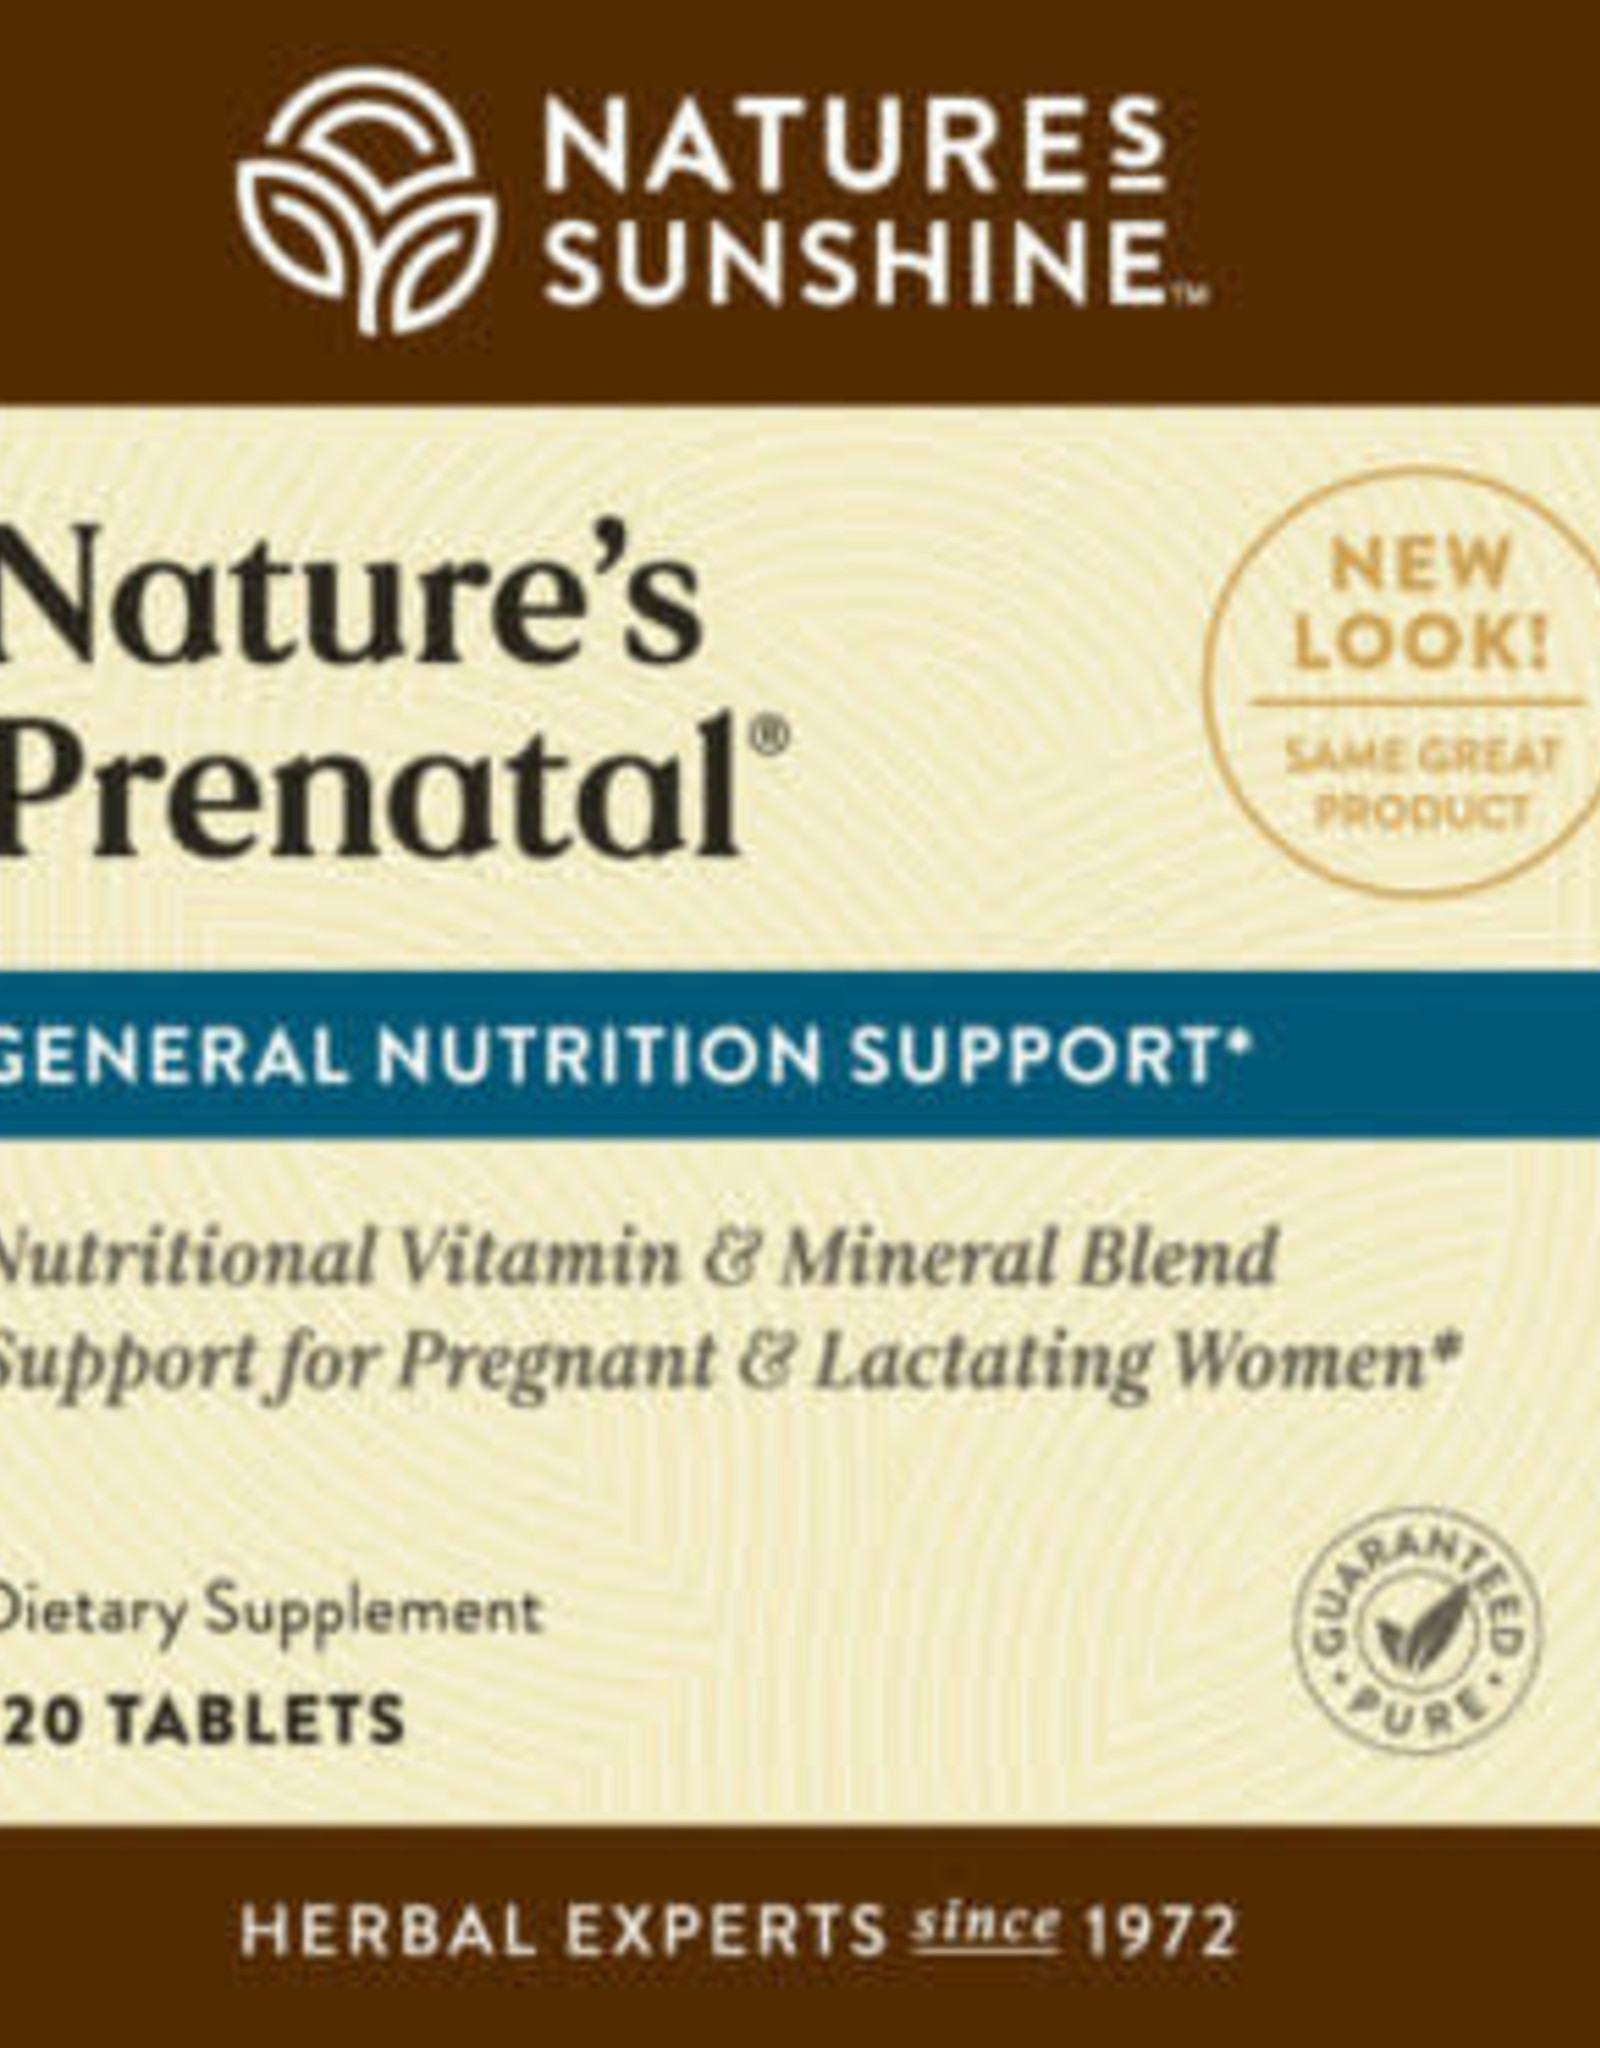 Nature's Sunshine Nature's Prenatal Multivitamin (120 tabs)